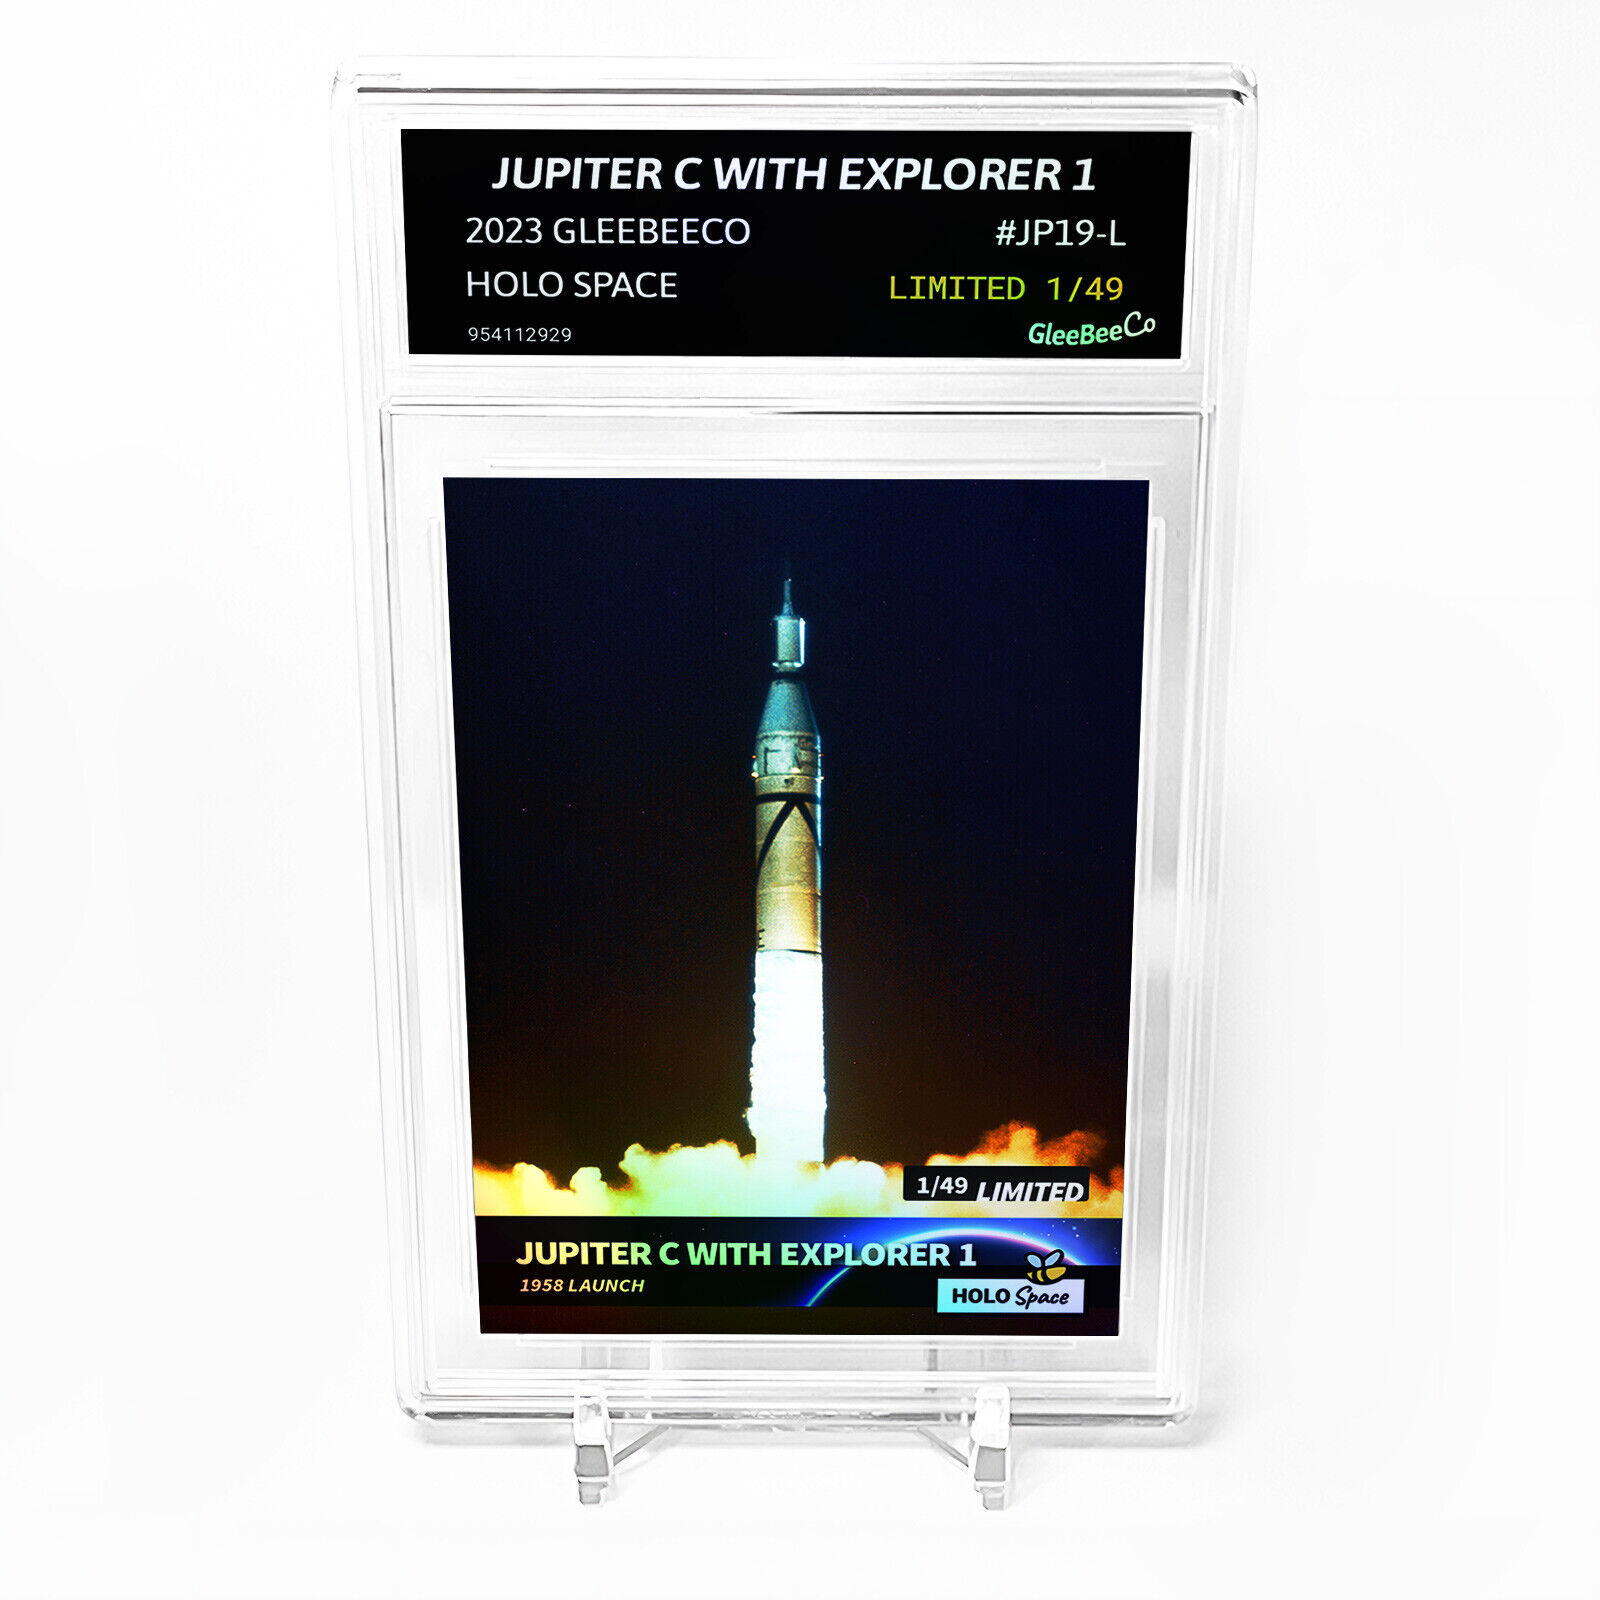 JUPITER C WITH EXPLORER 1 Card GleeBeeCo Holo Space #JP19-L NASA /49